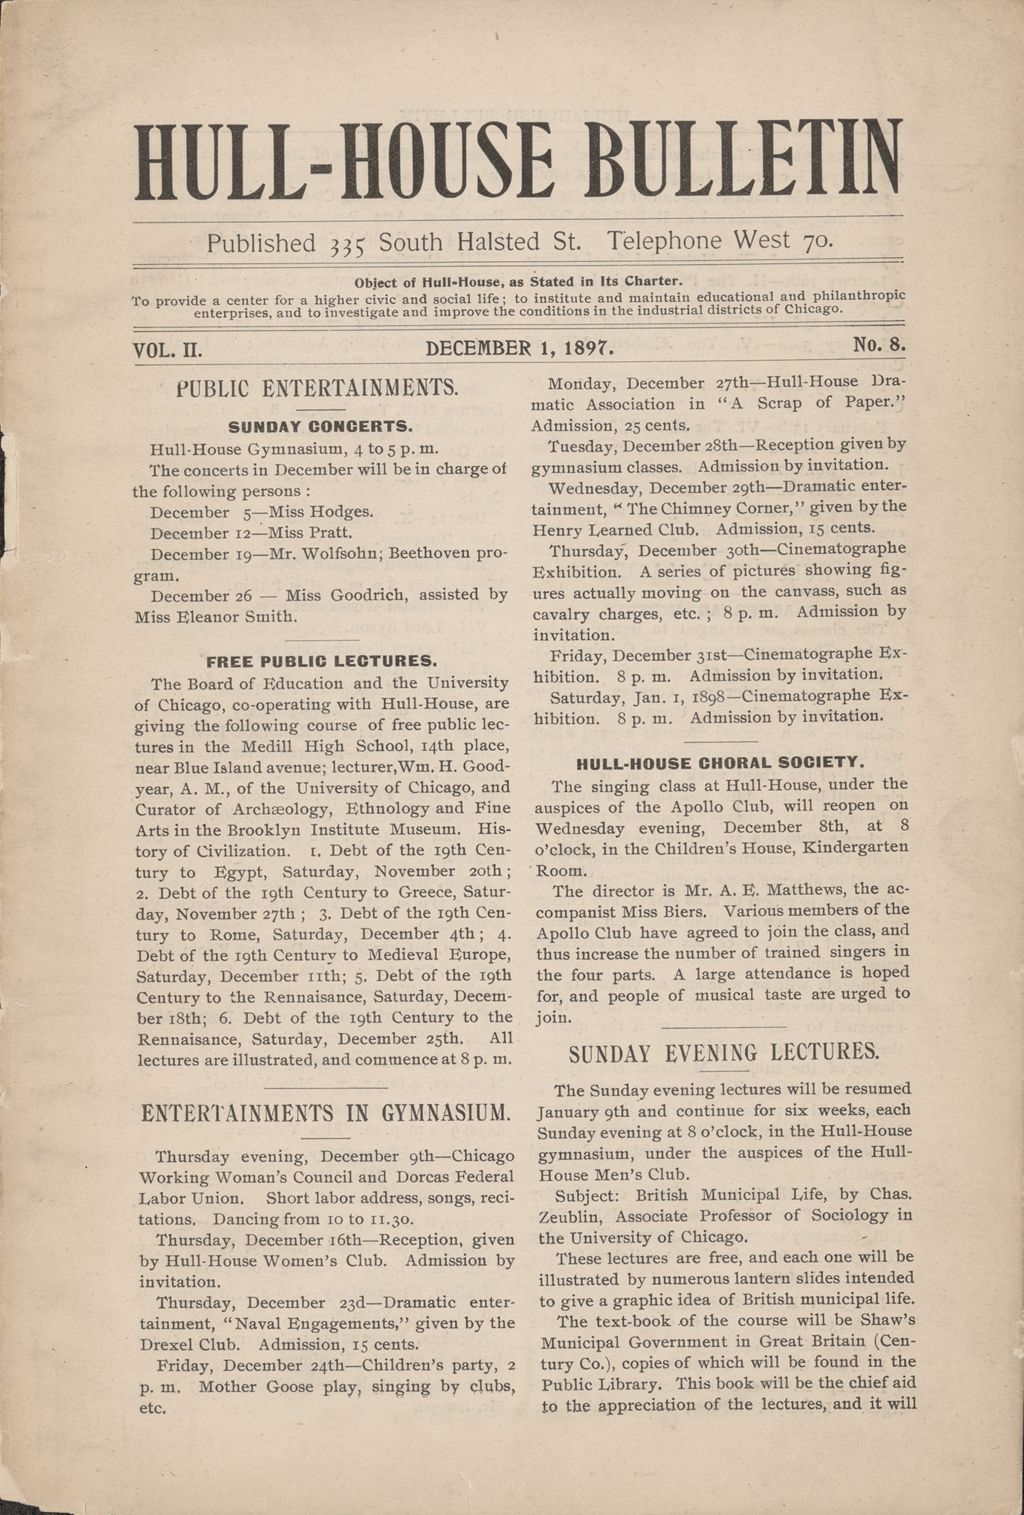 Hull-House Bulletin, vol. 2, no. 8, 1897: Dec. 1